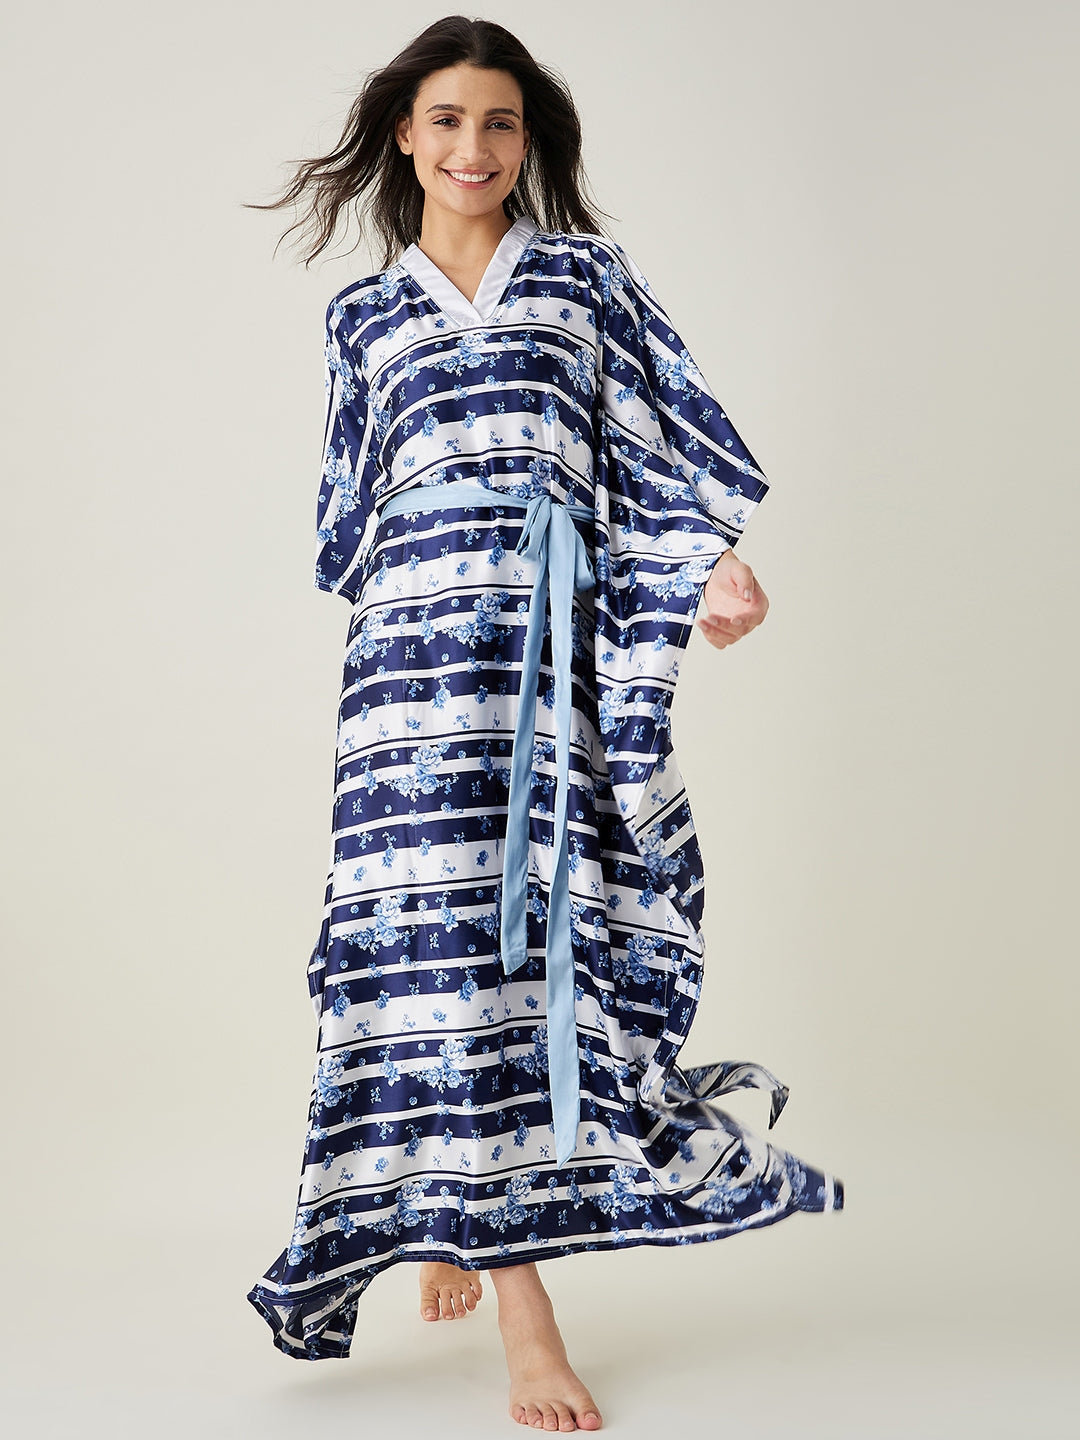 Women's White and Blue Ditsy Floral Loungewear Kaftan - The Kaftan Company